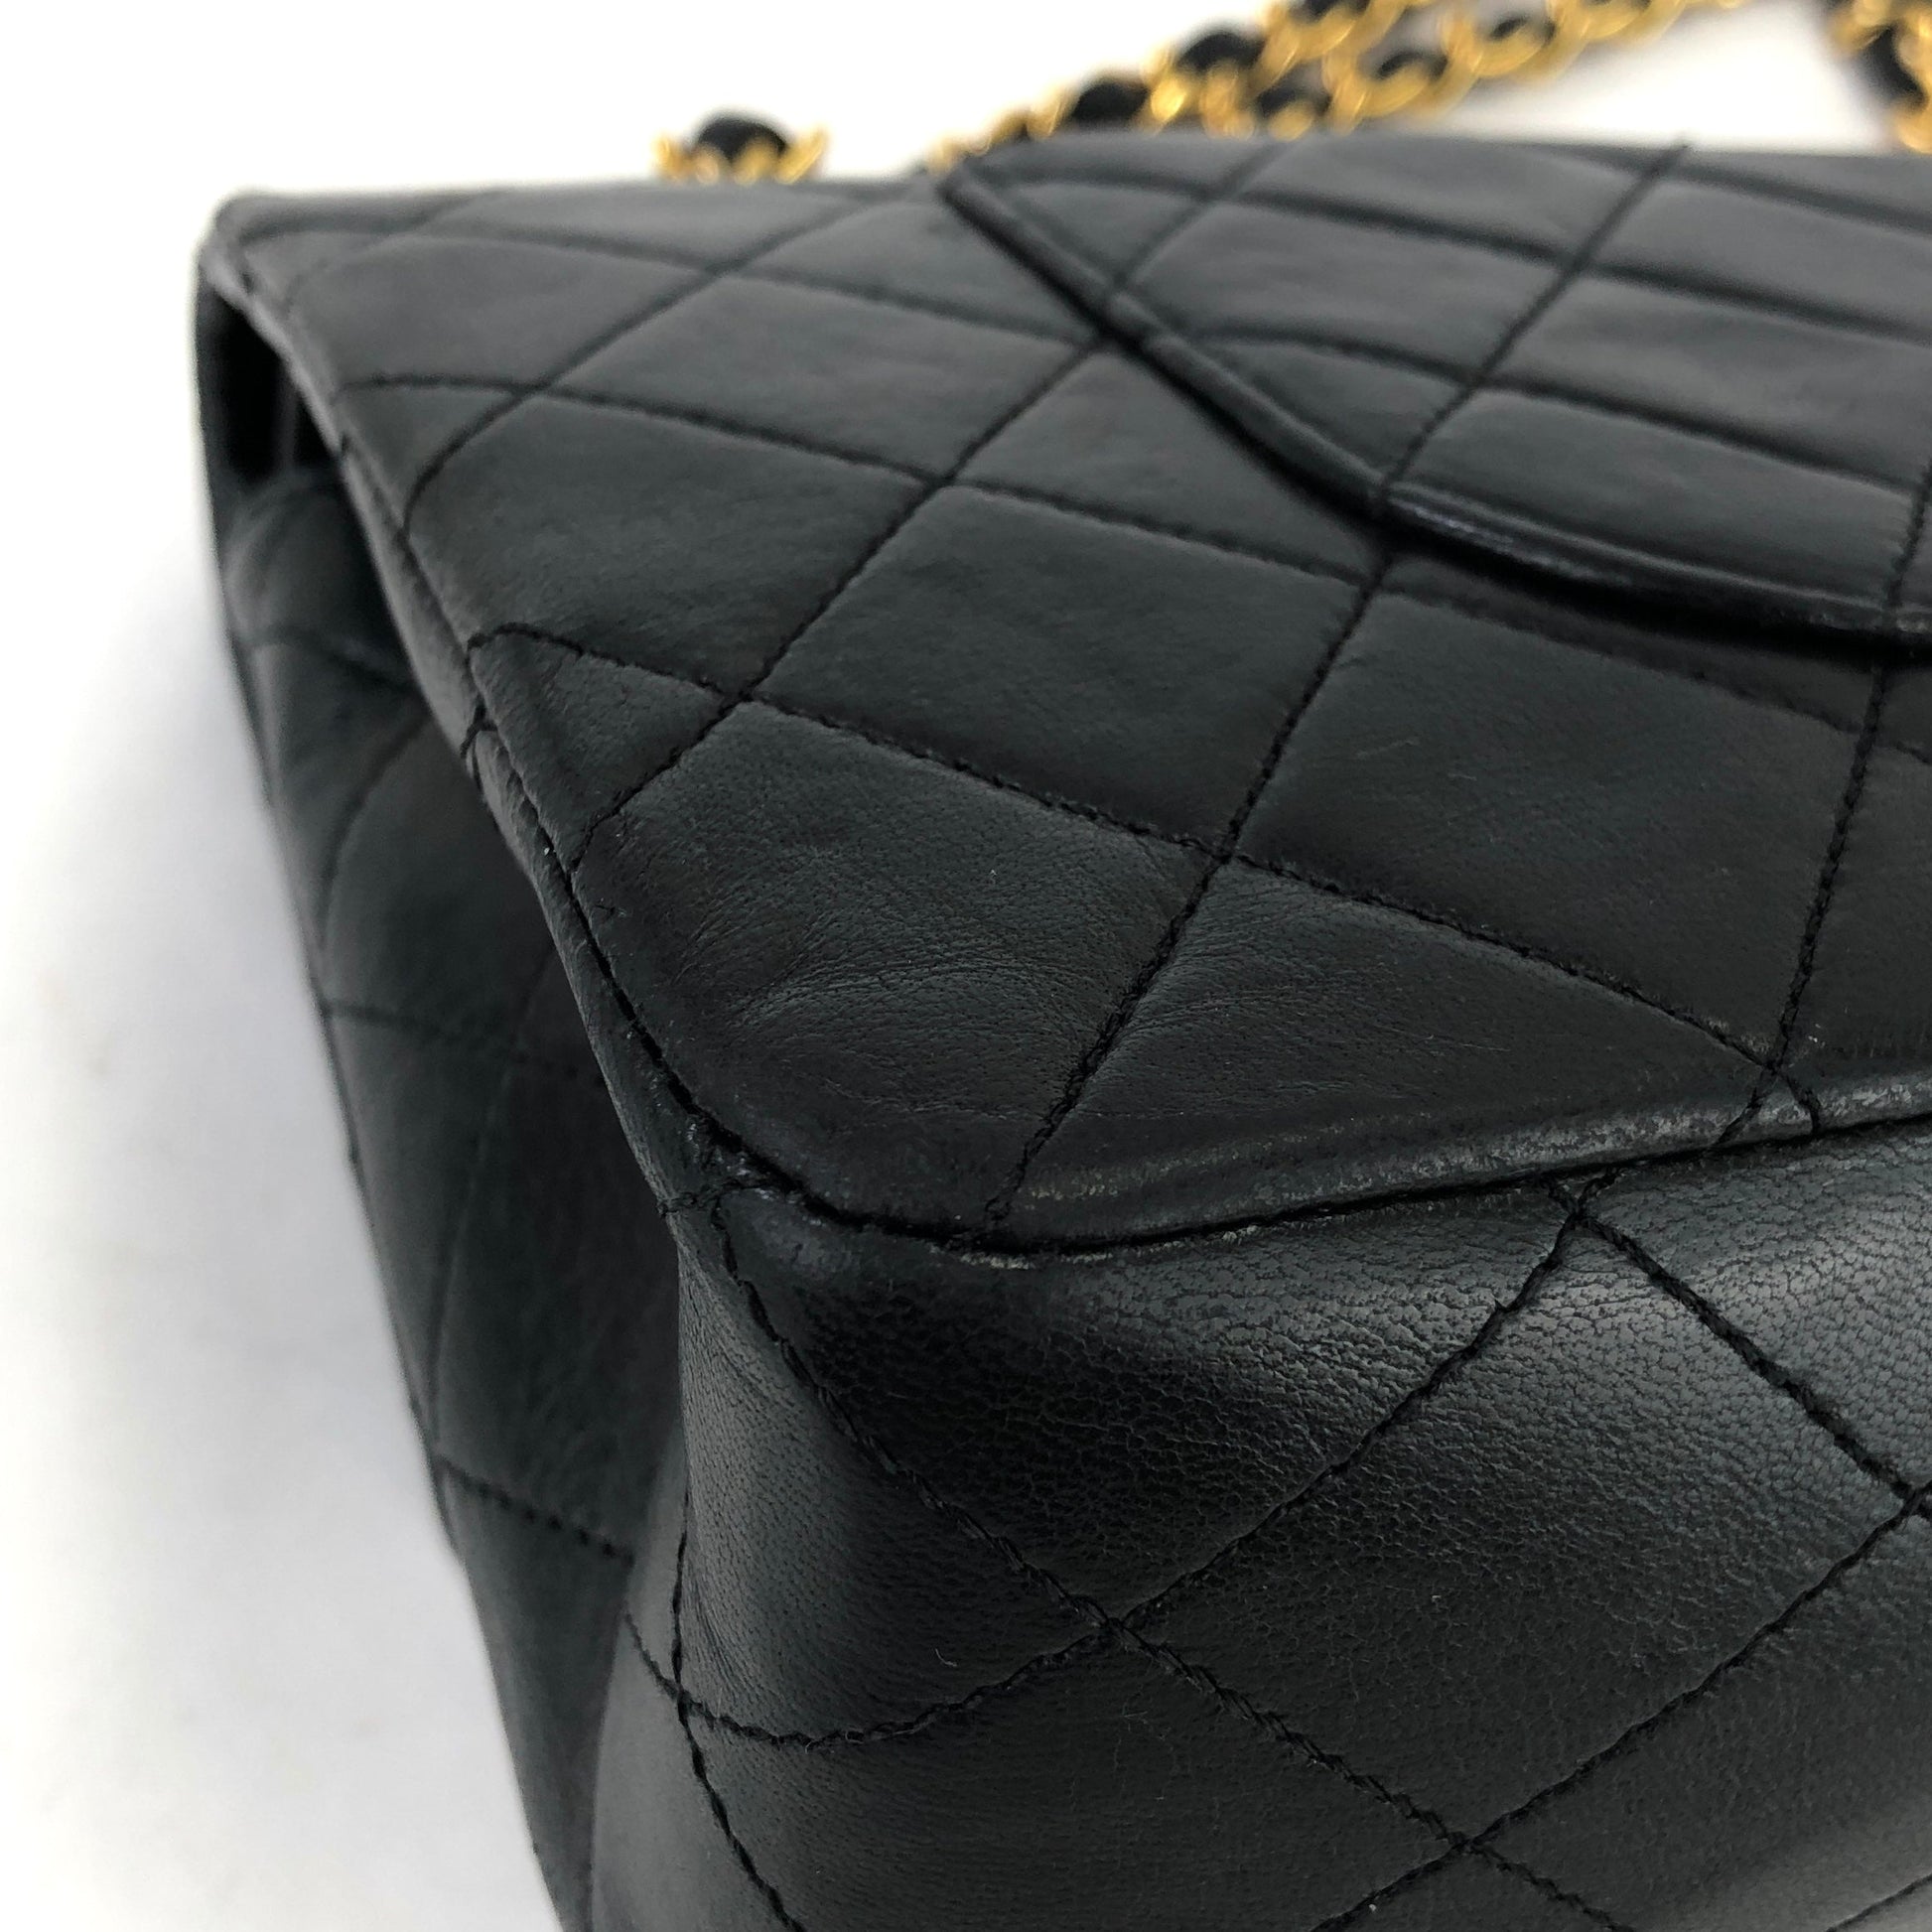 70's, 80's Vintage CHANEL genuine black suede leather kiss lock